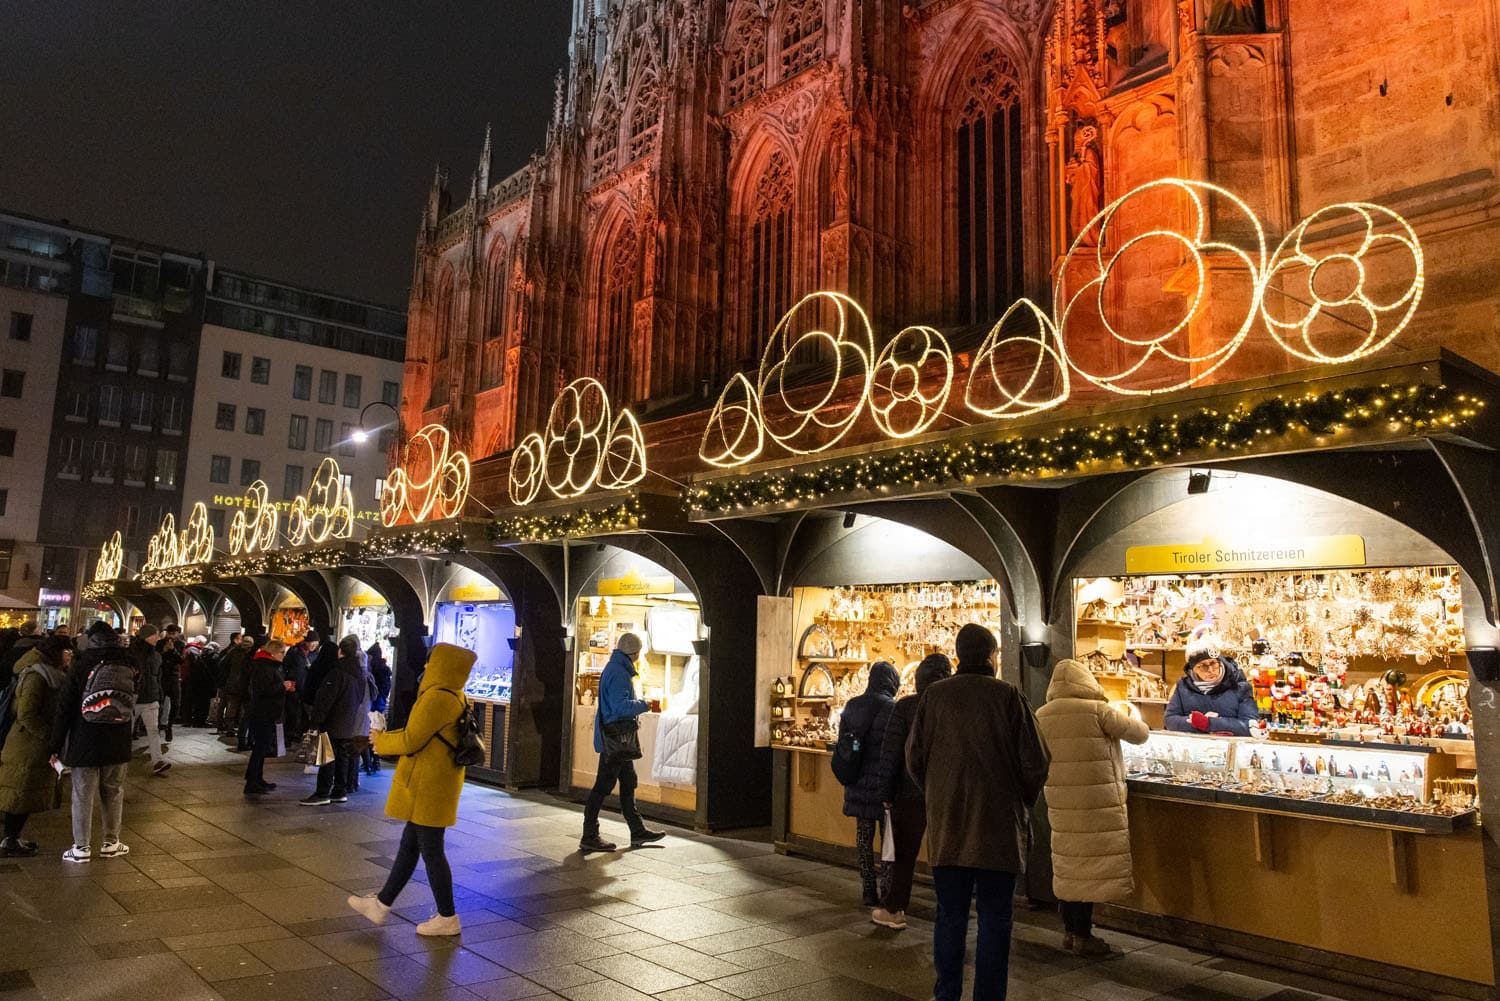 Stephensplatz Christmas Market | Vienna Christmas Markets